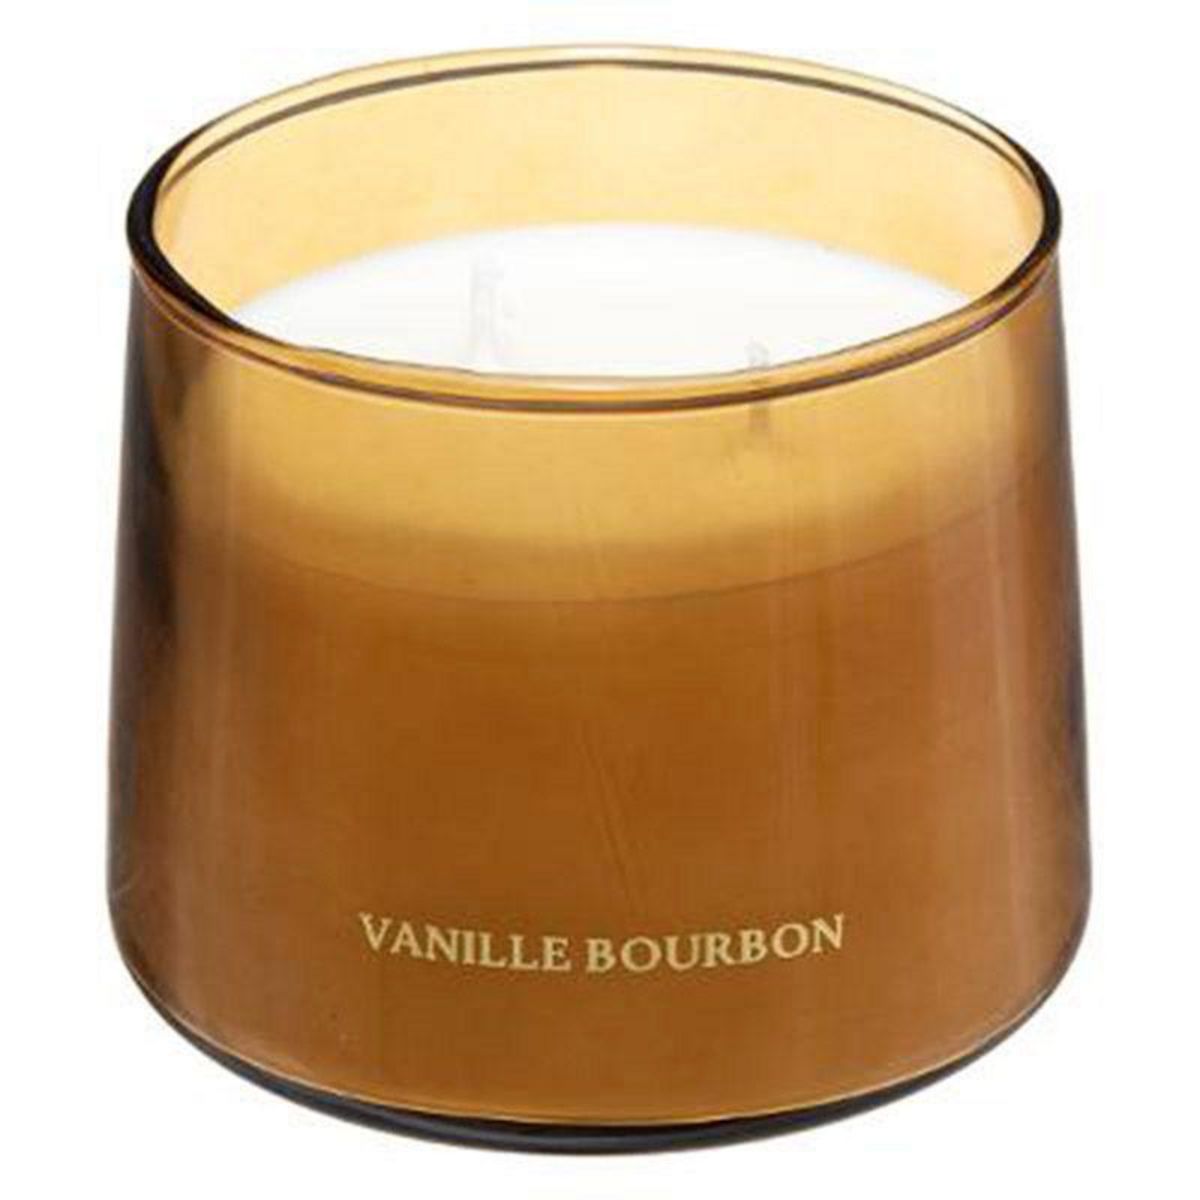  Bougie Parfumée en Verre  Bili  300g Vanille Bourbon